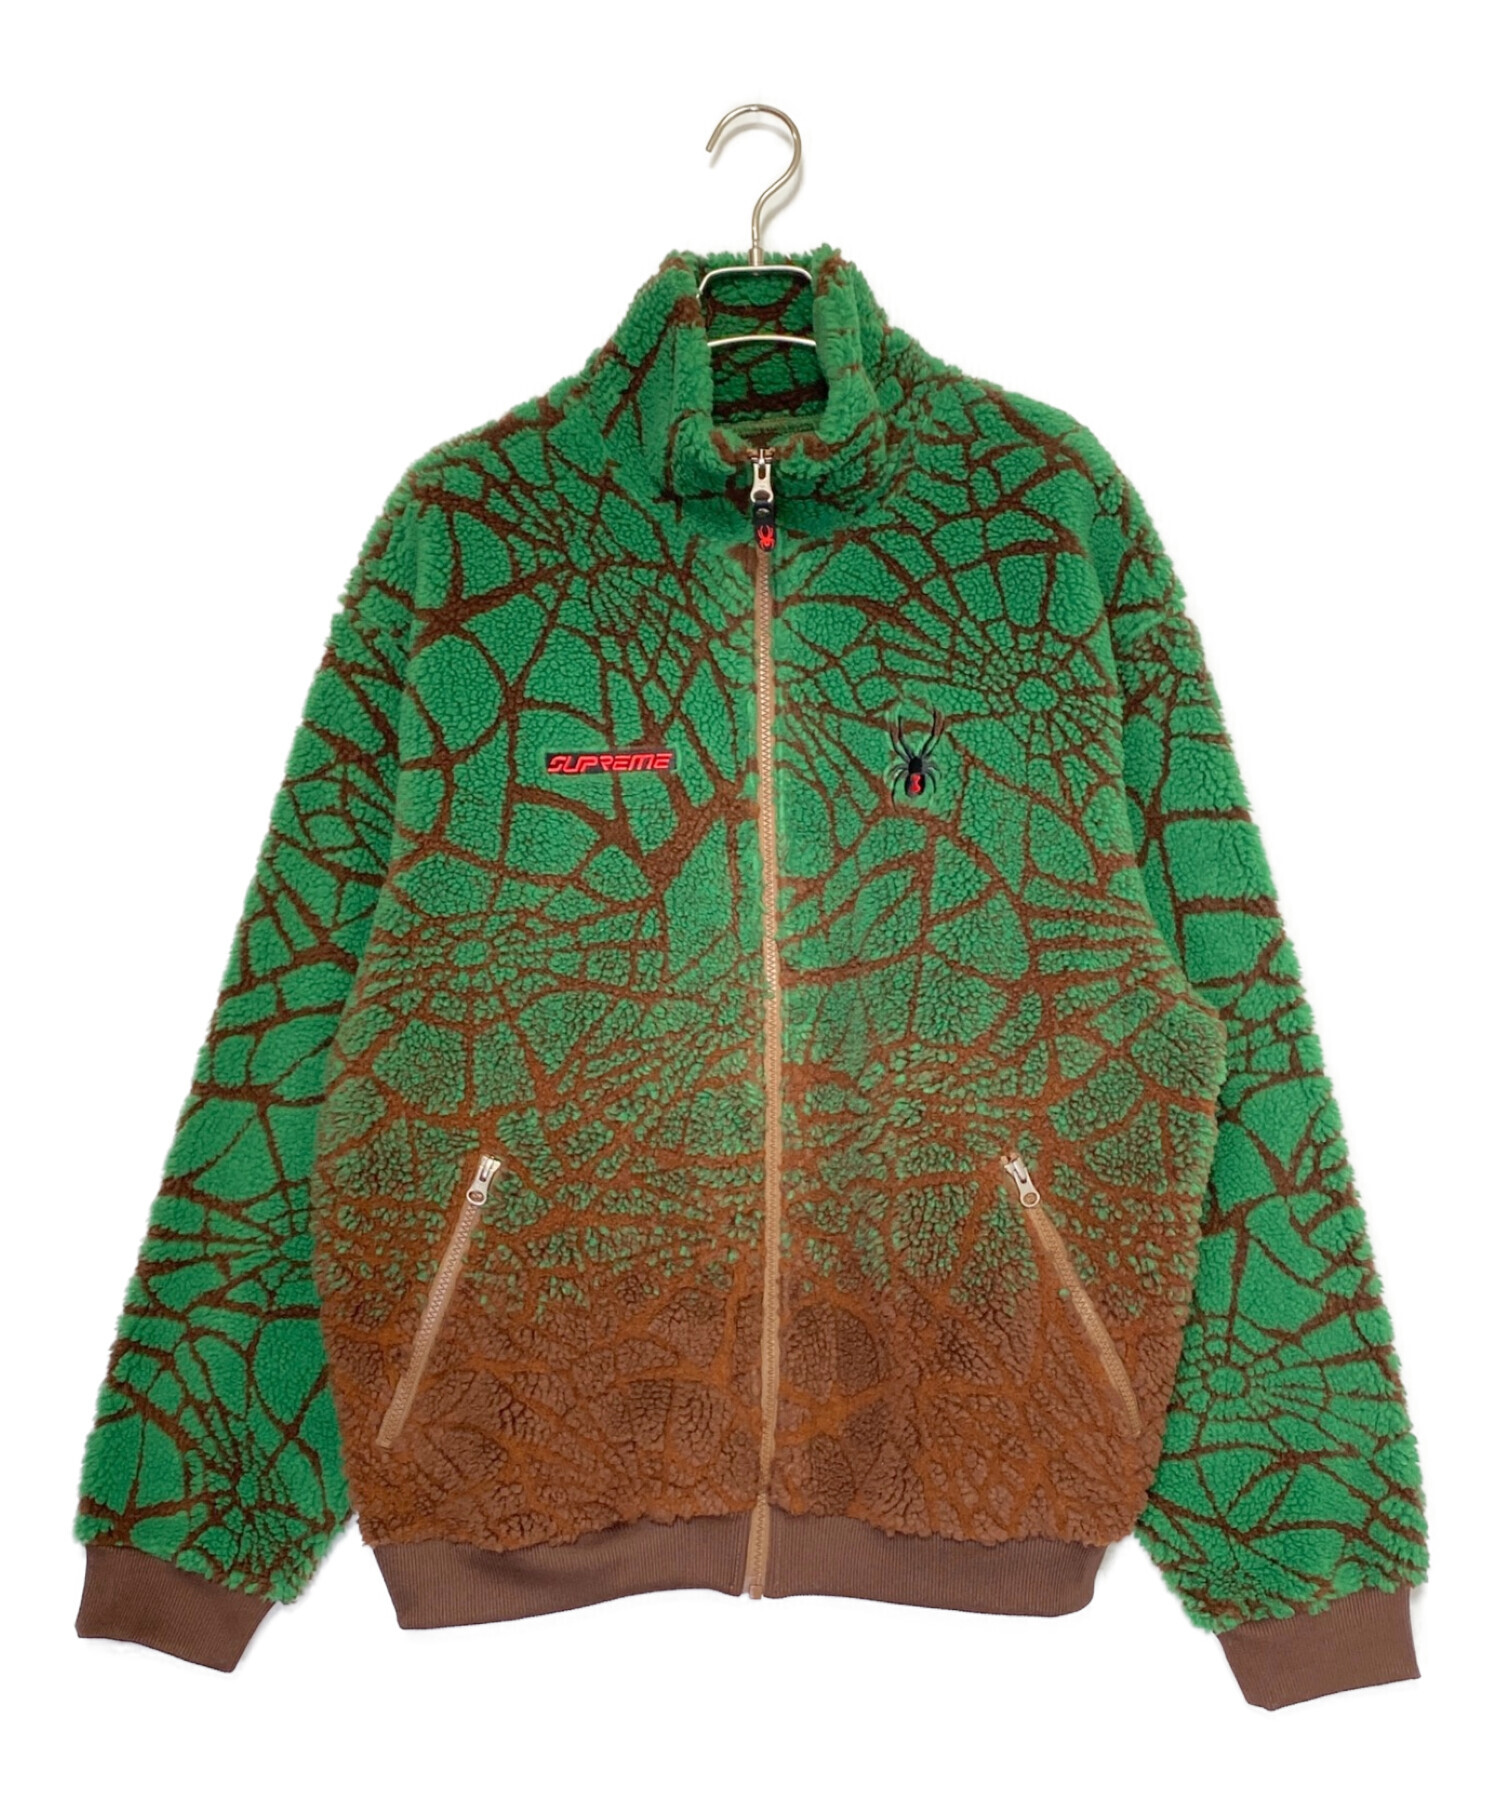 Supreme Spyder Fleece Jacket Lサイズ42000円で即決はどうですか